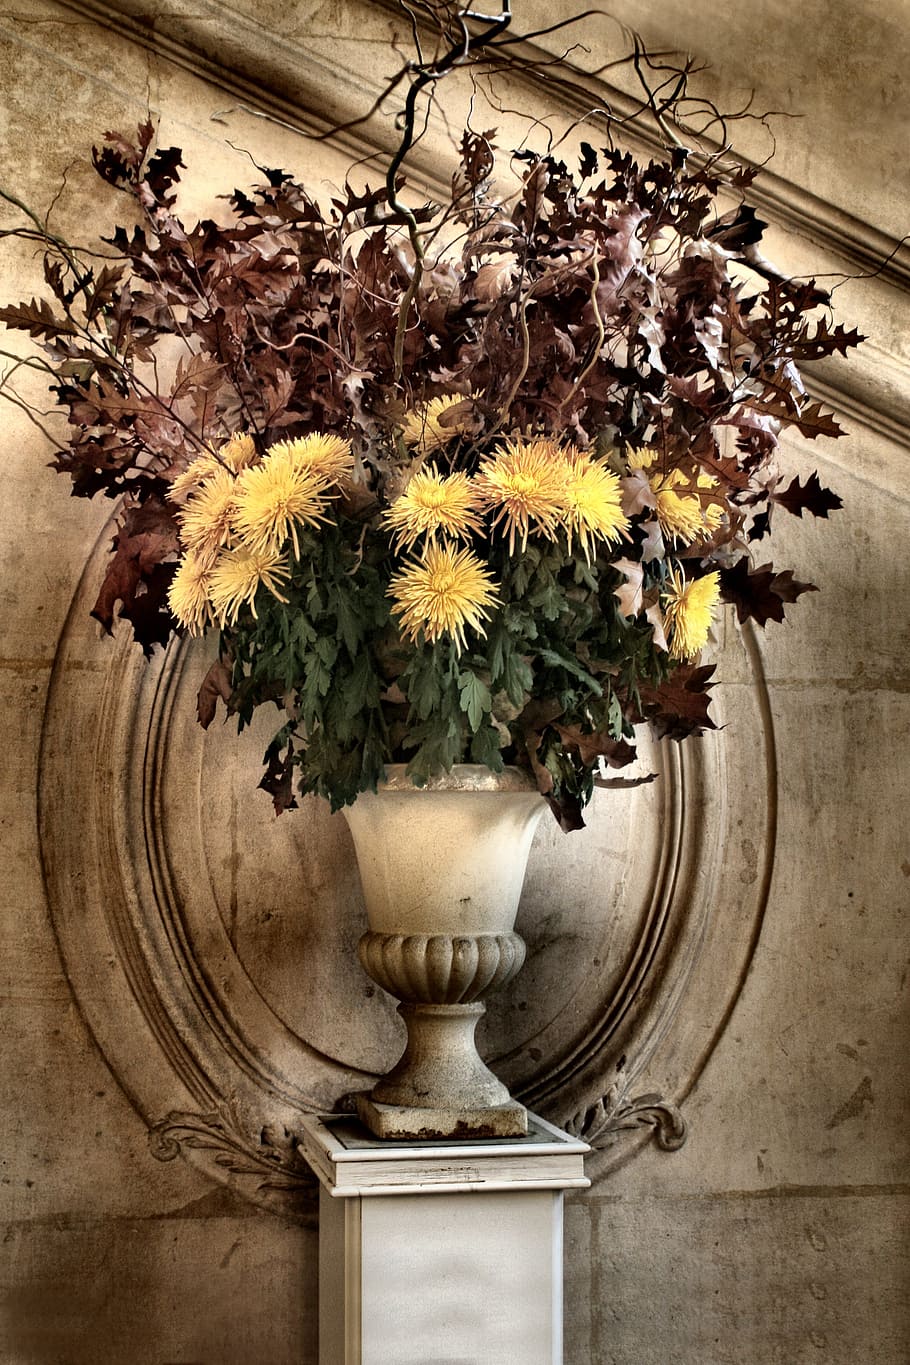 view, white, ceramic, vase, yellow, brown, flowers, antique, art, beautiful